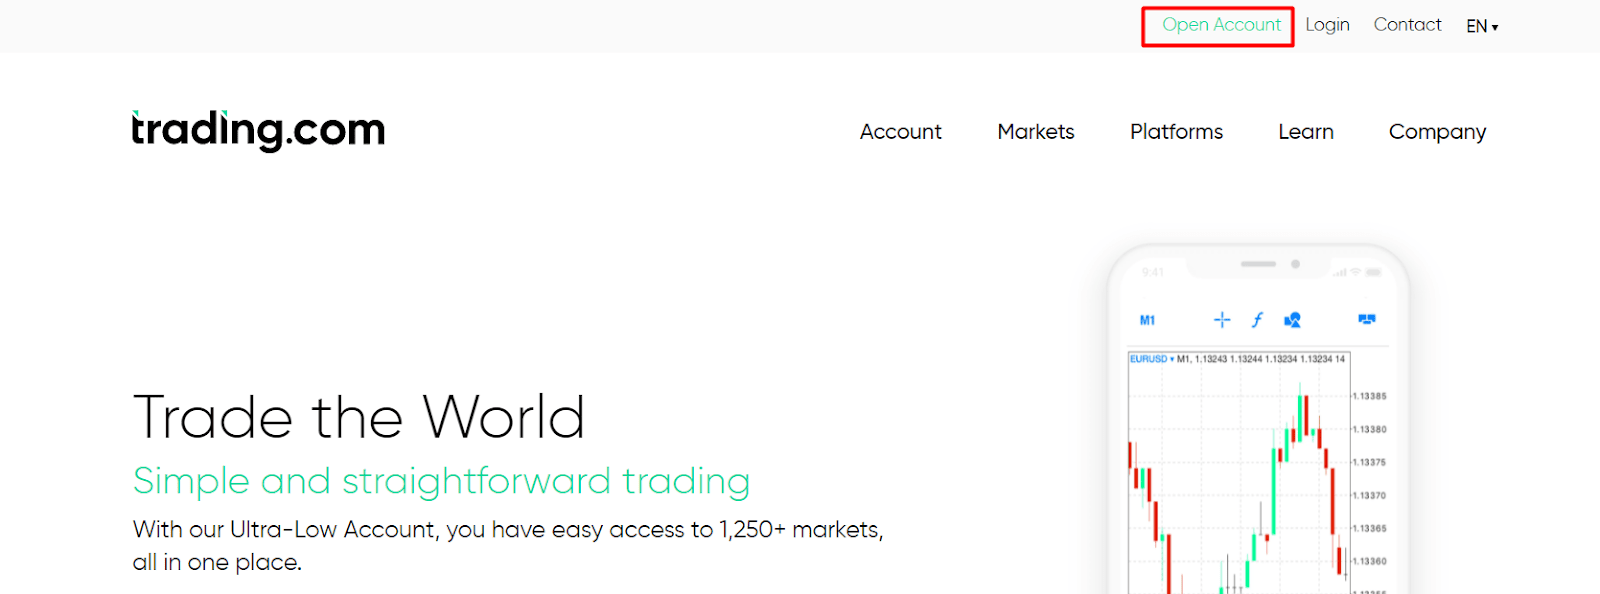 Trading.com Overzicht - Rekening openen